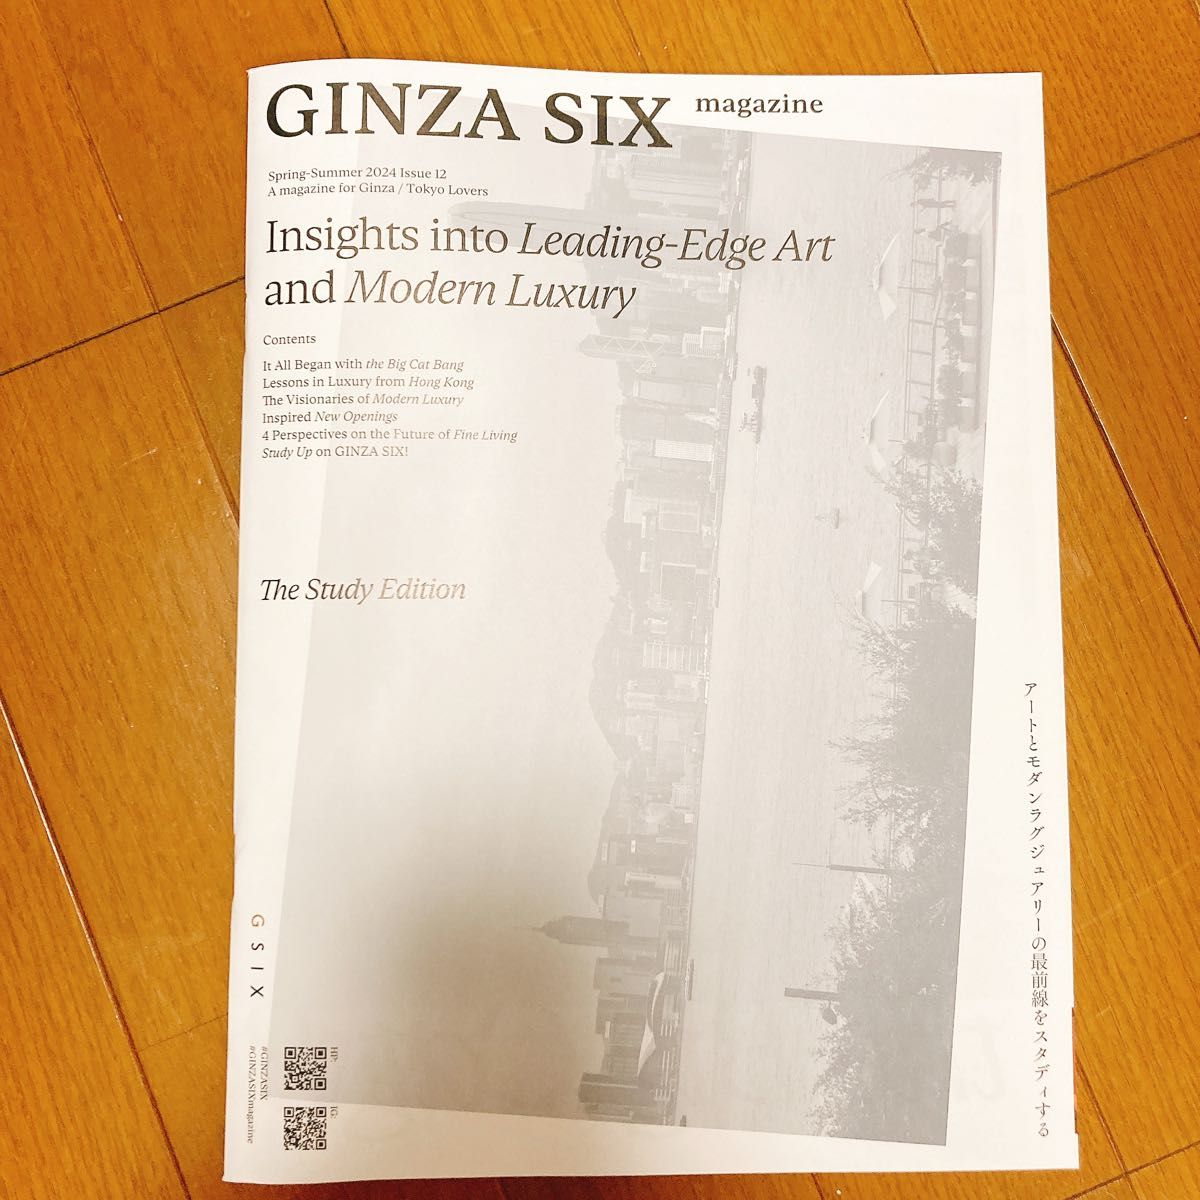 【本日限定価格】GINZA SIX magazine  春夏2024 Issue12#GINZASIX #銀座